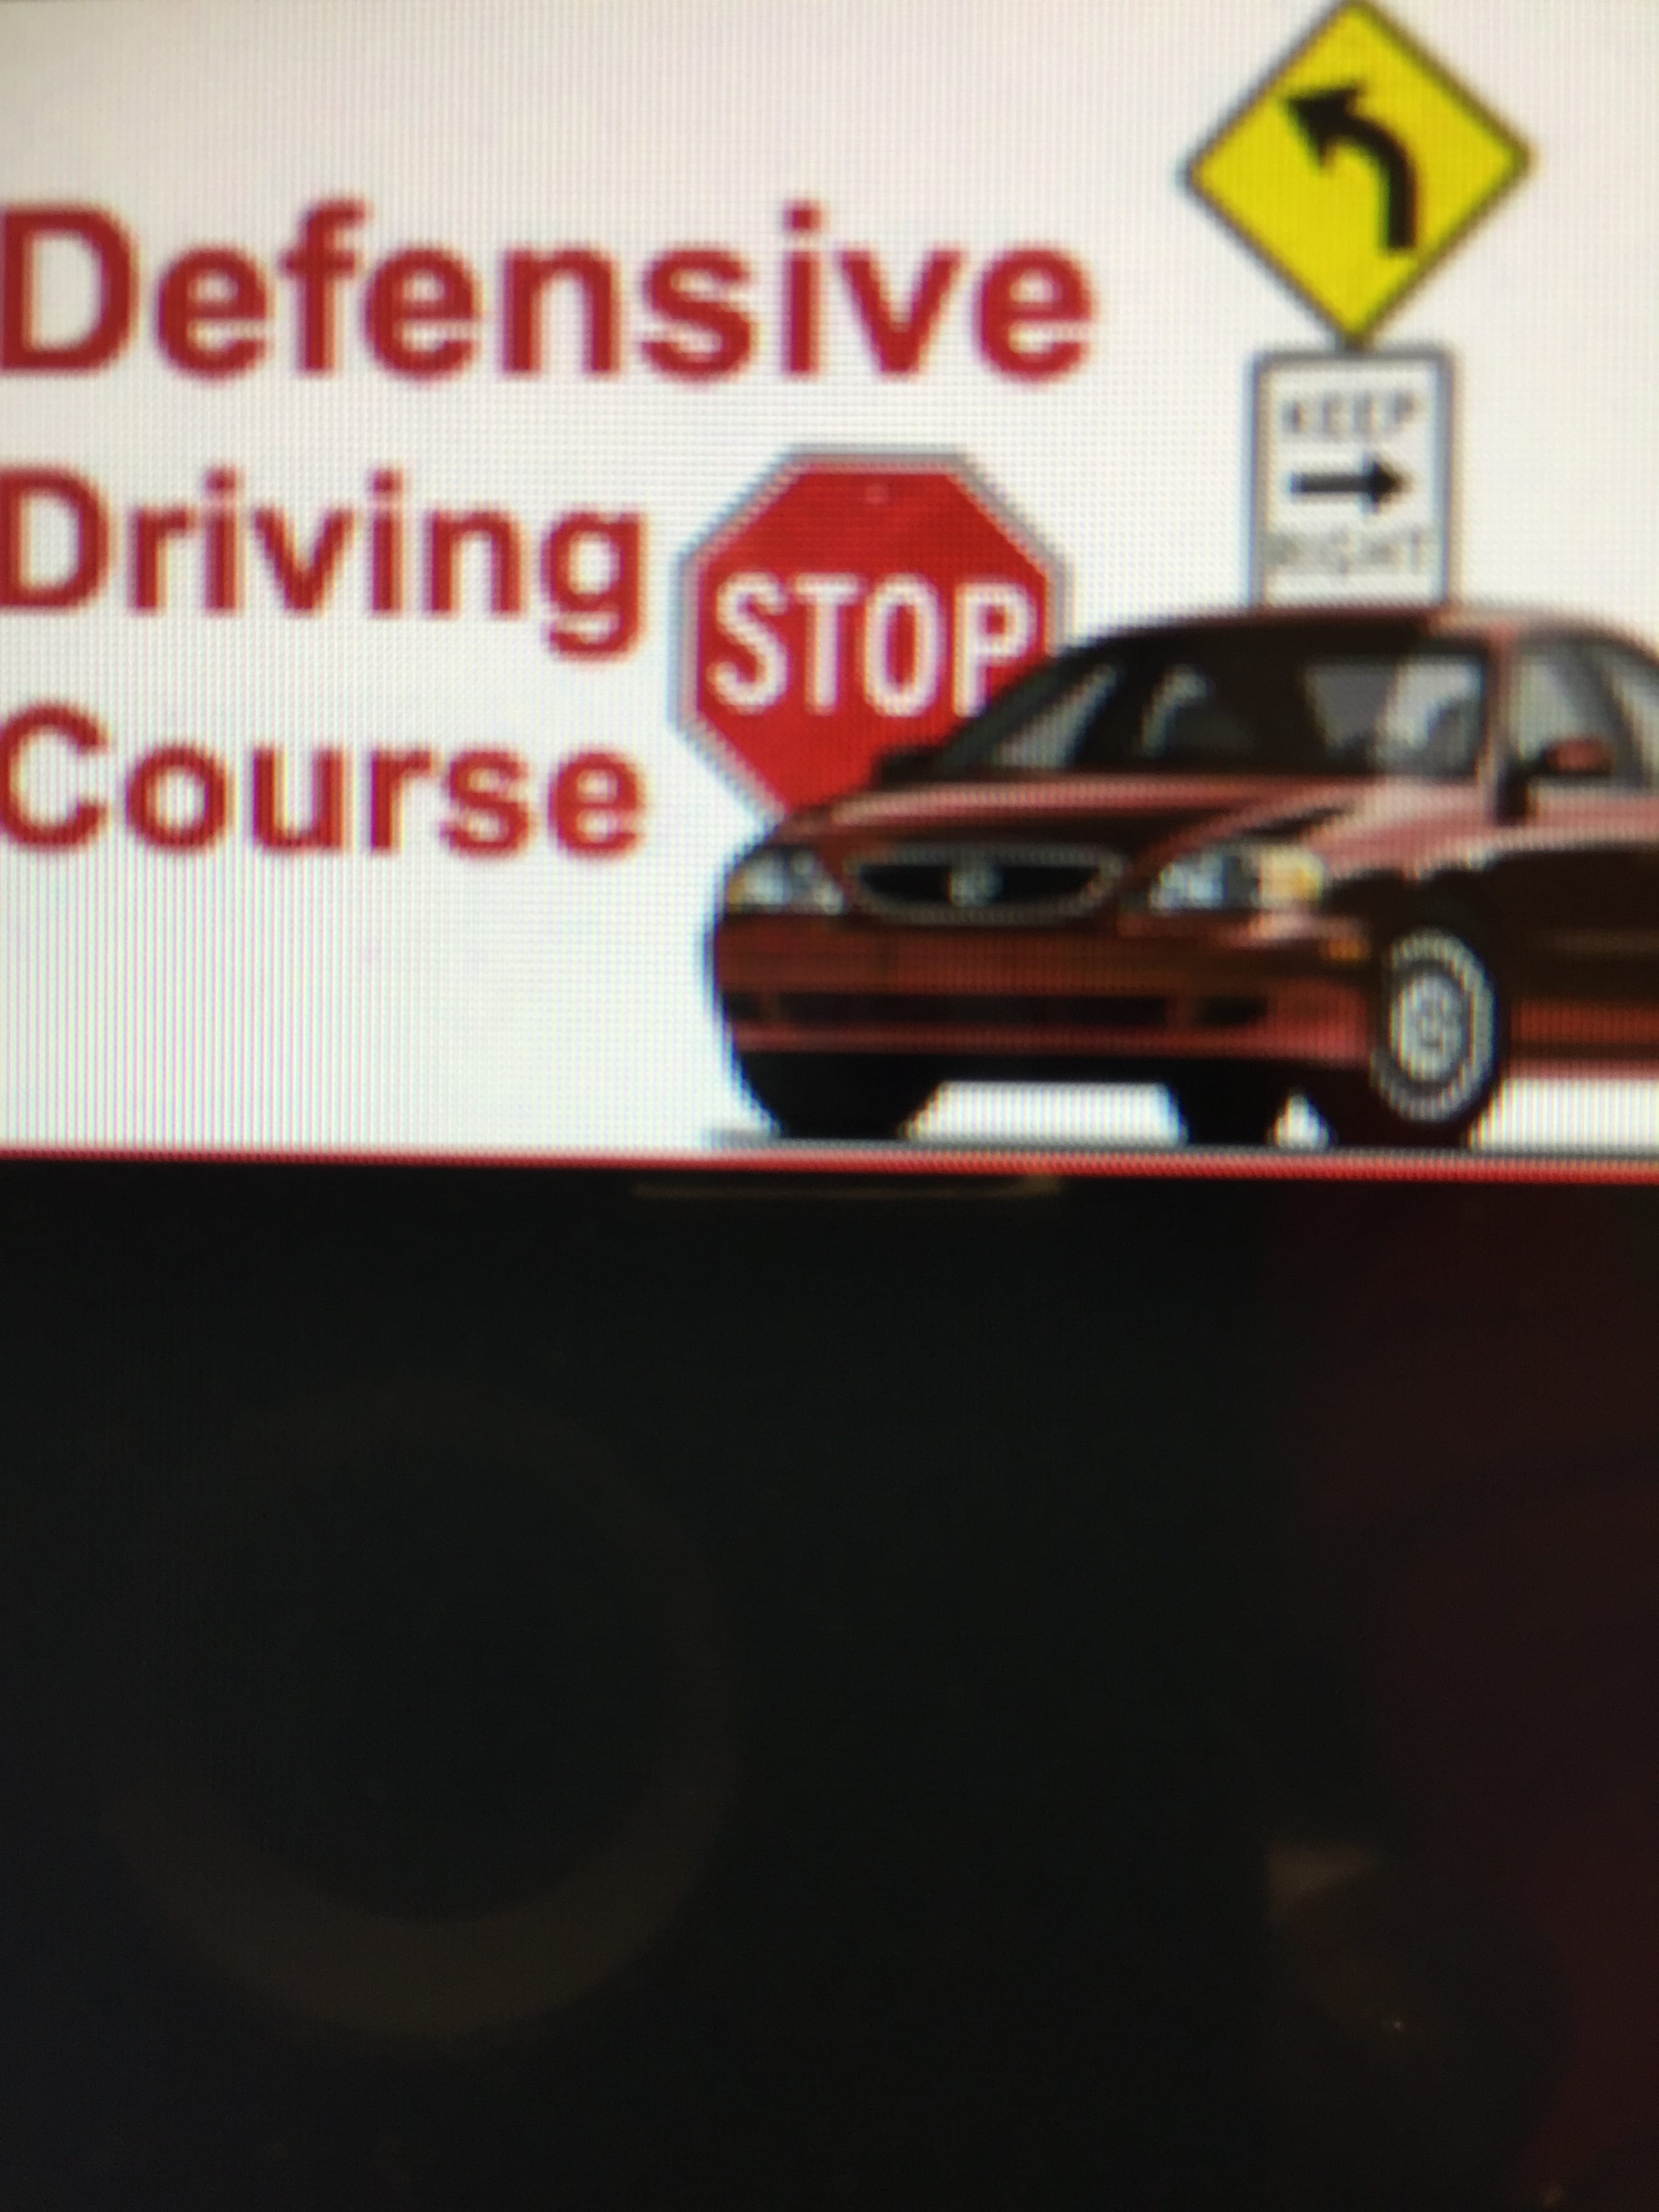 Driving Course - Empire Safety Council